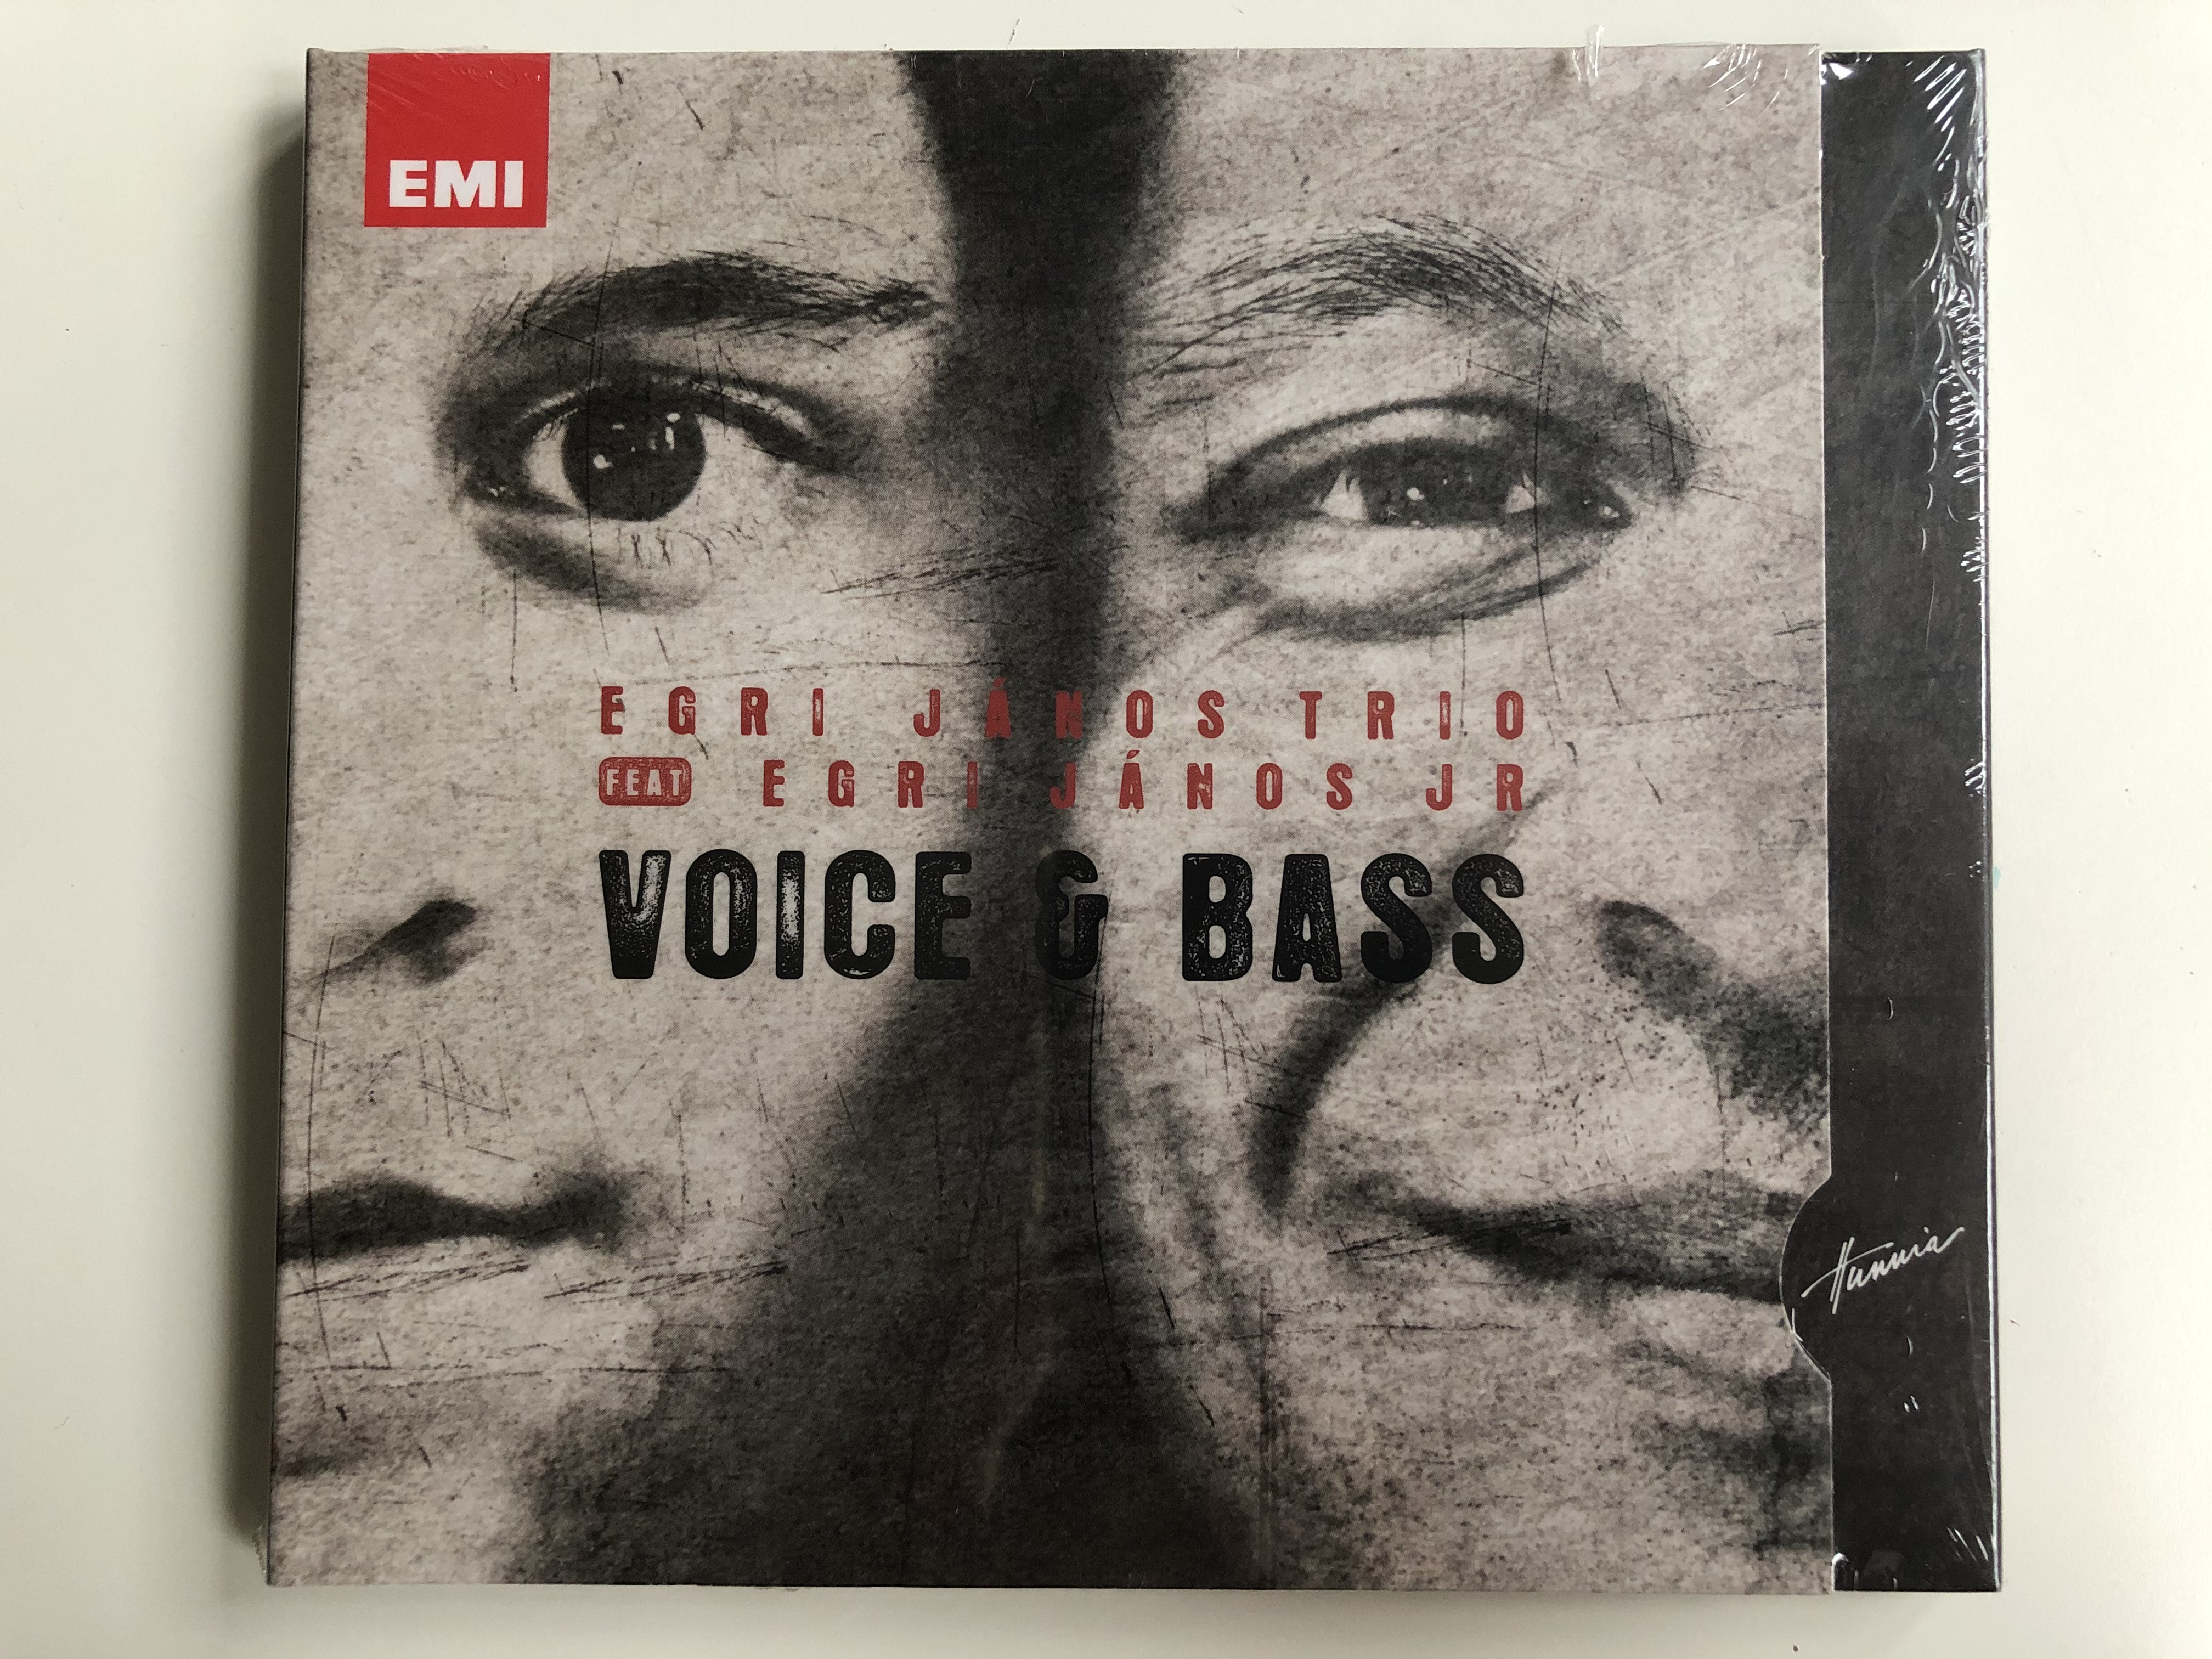 egri-janos-trio-feat.-egri-janos-jr.-voice-bass-hunnia-records-film-production-audio-cd-2010-5999883042427-1-.jpg